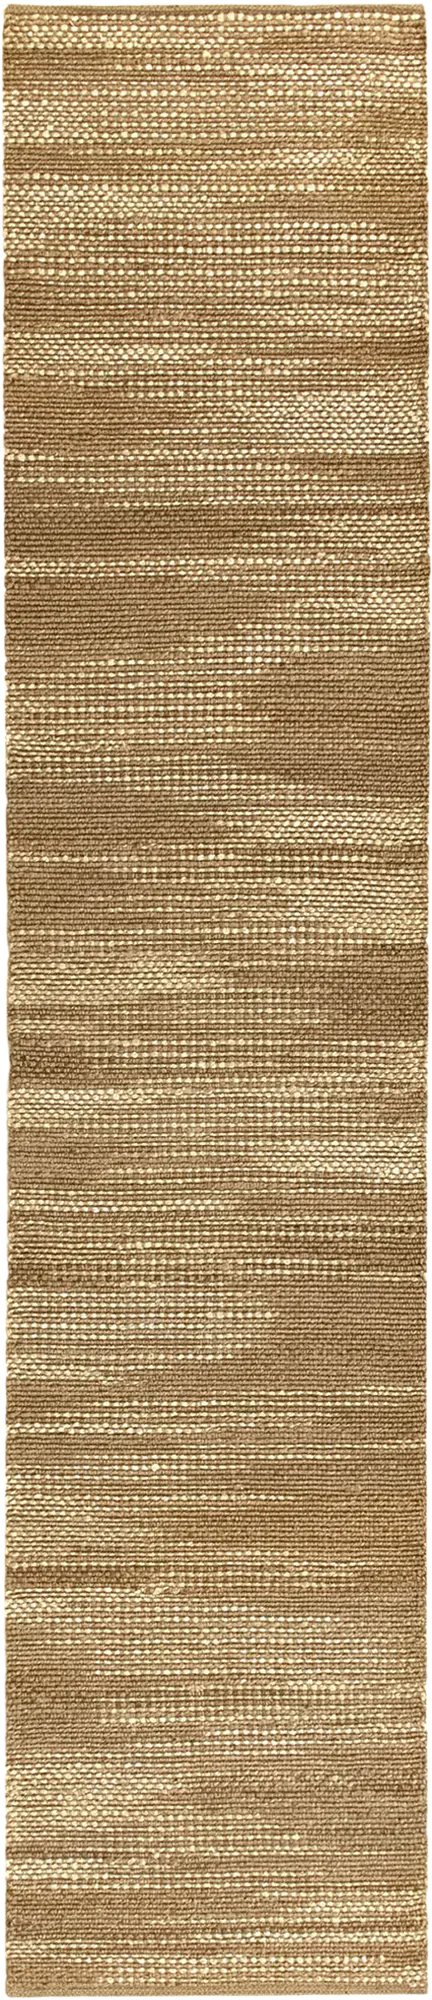 Alfombra pasillera yute giralda fibra natural jaspeada 80x200cm